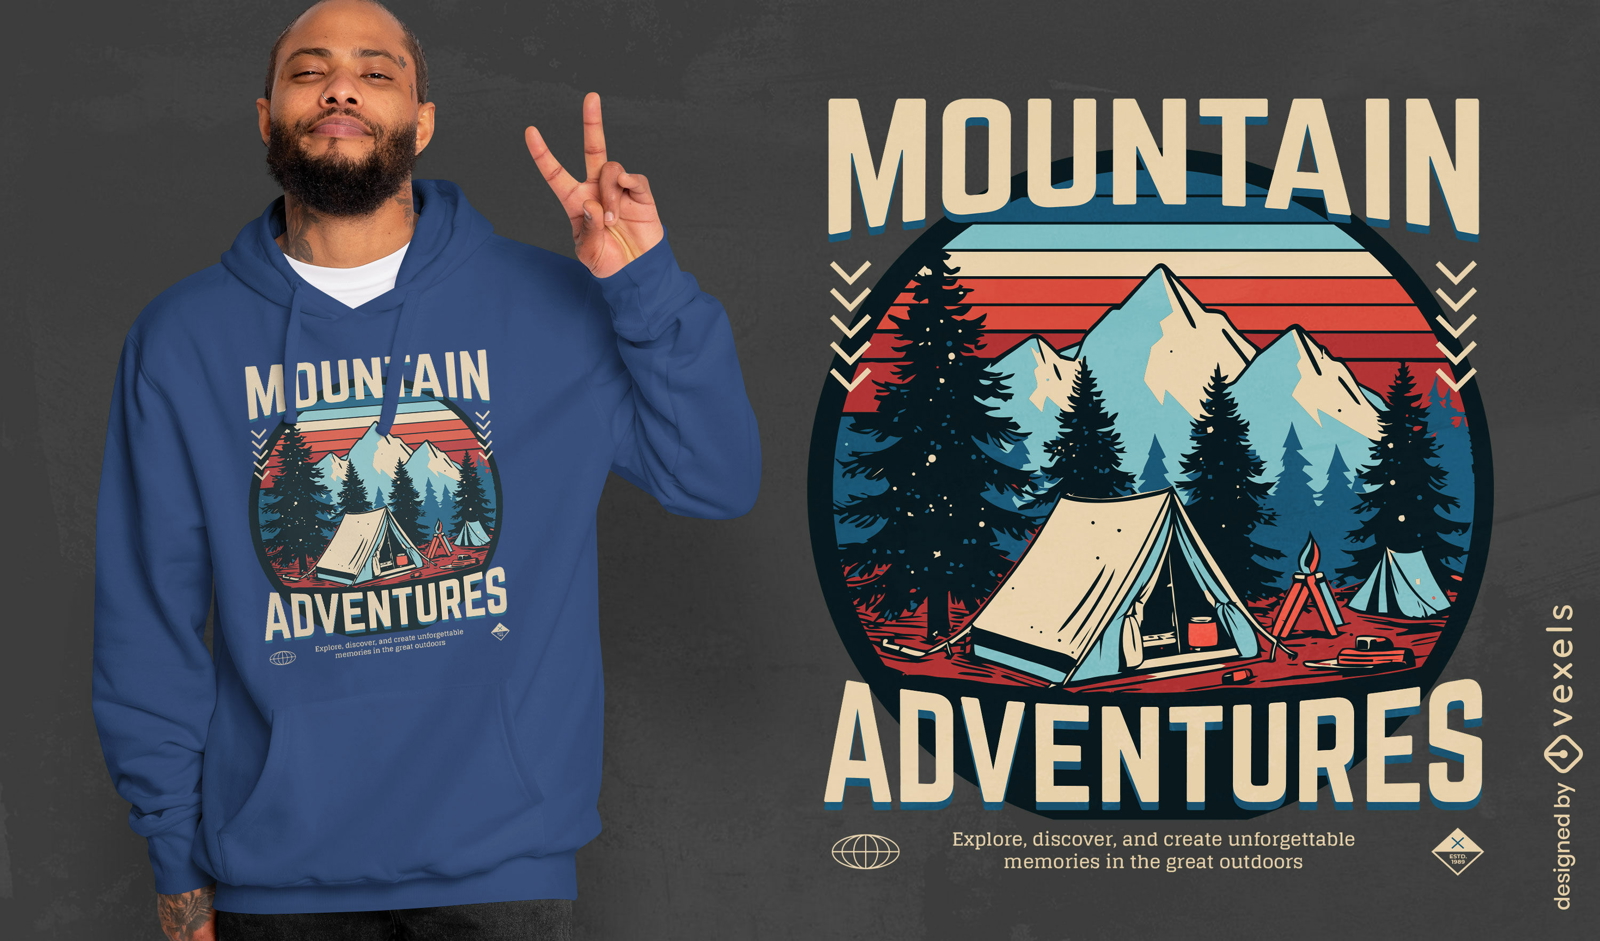 Mountain adventures t-shirt design